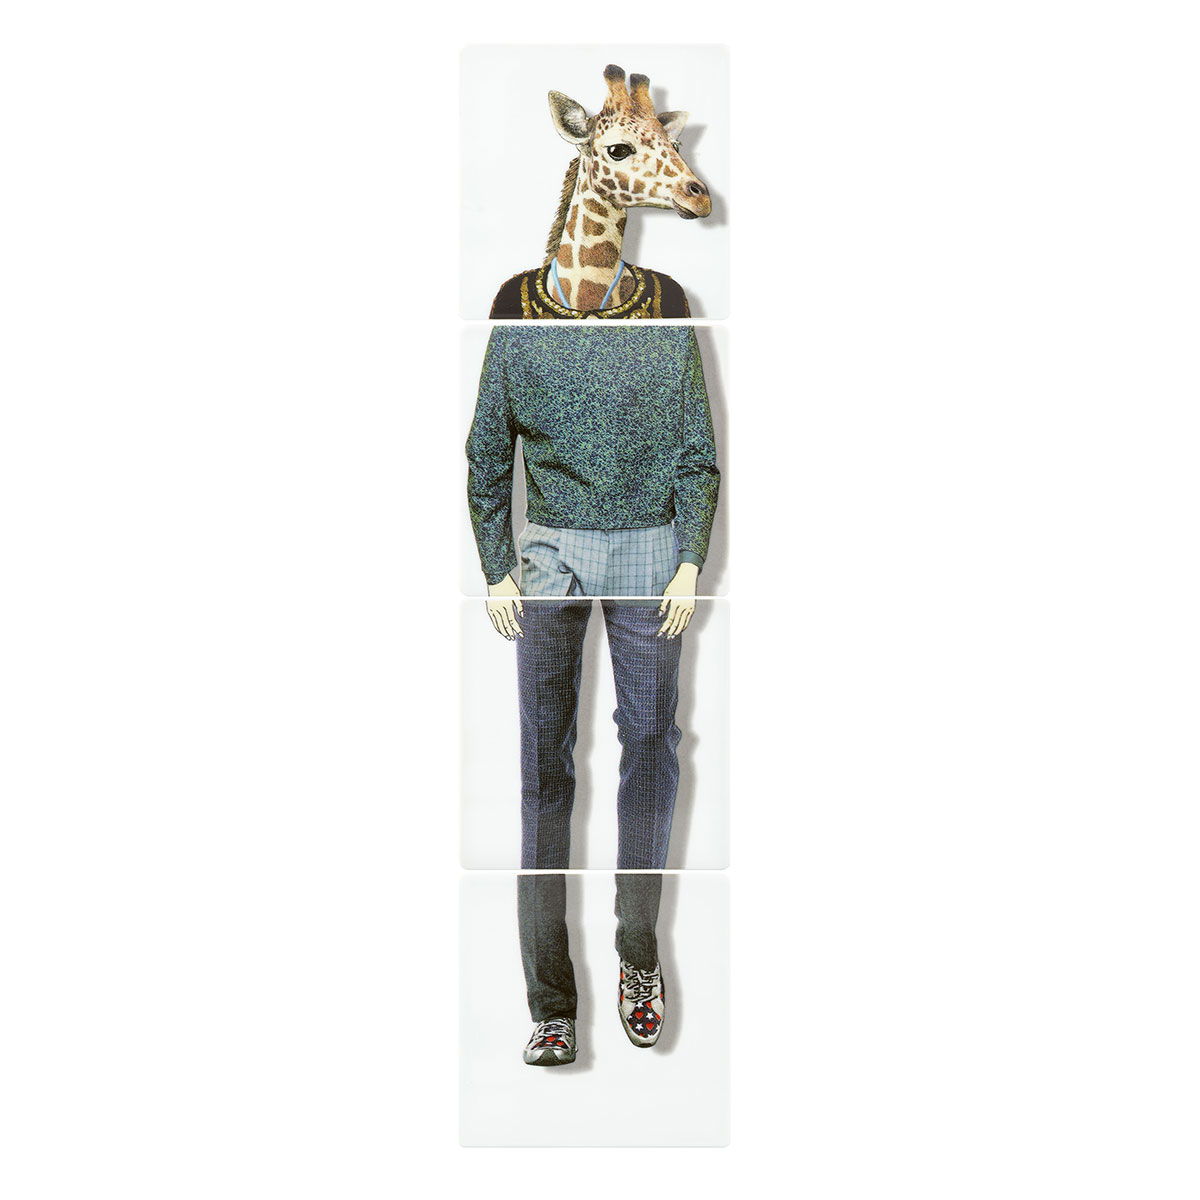 Vista Alegre Porcelain Christian Lacroix - Love Who You Want Set of 4 Coasters (Giraffe)